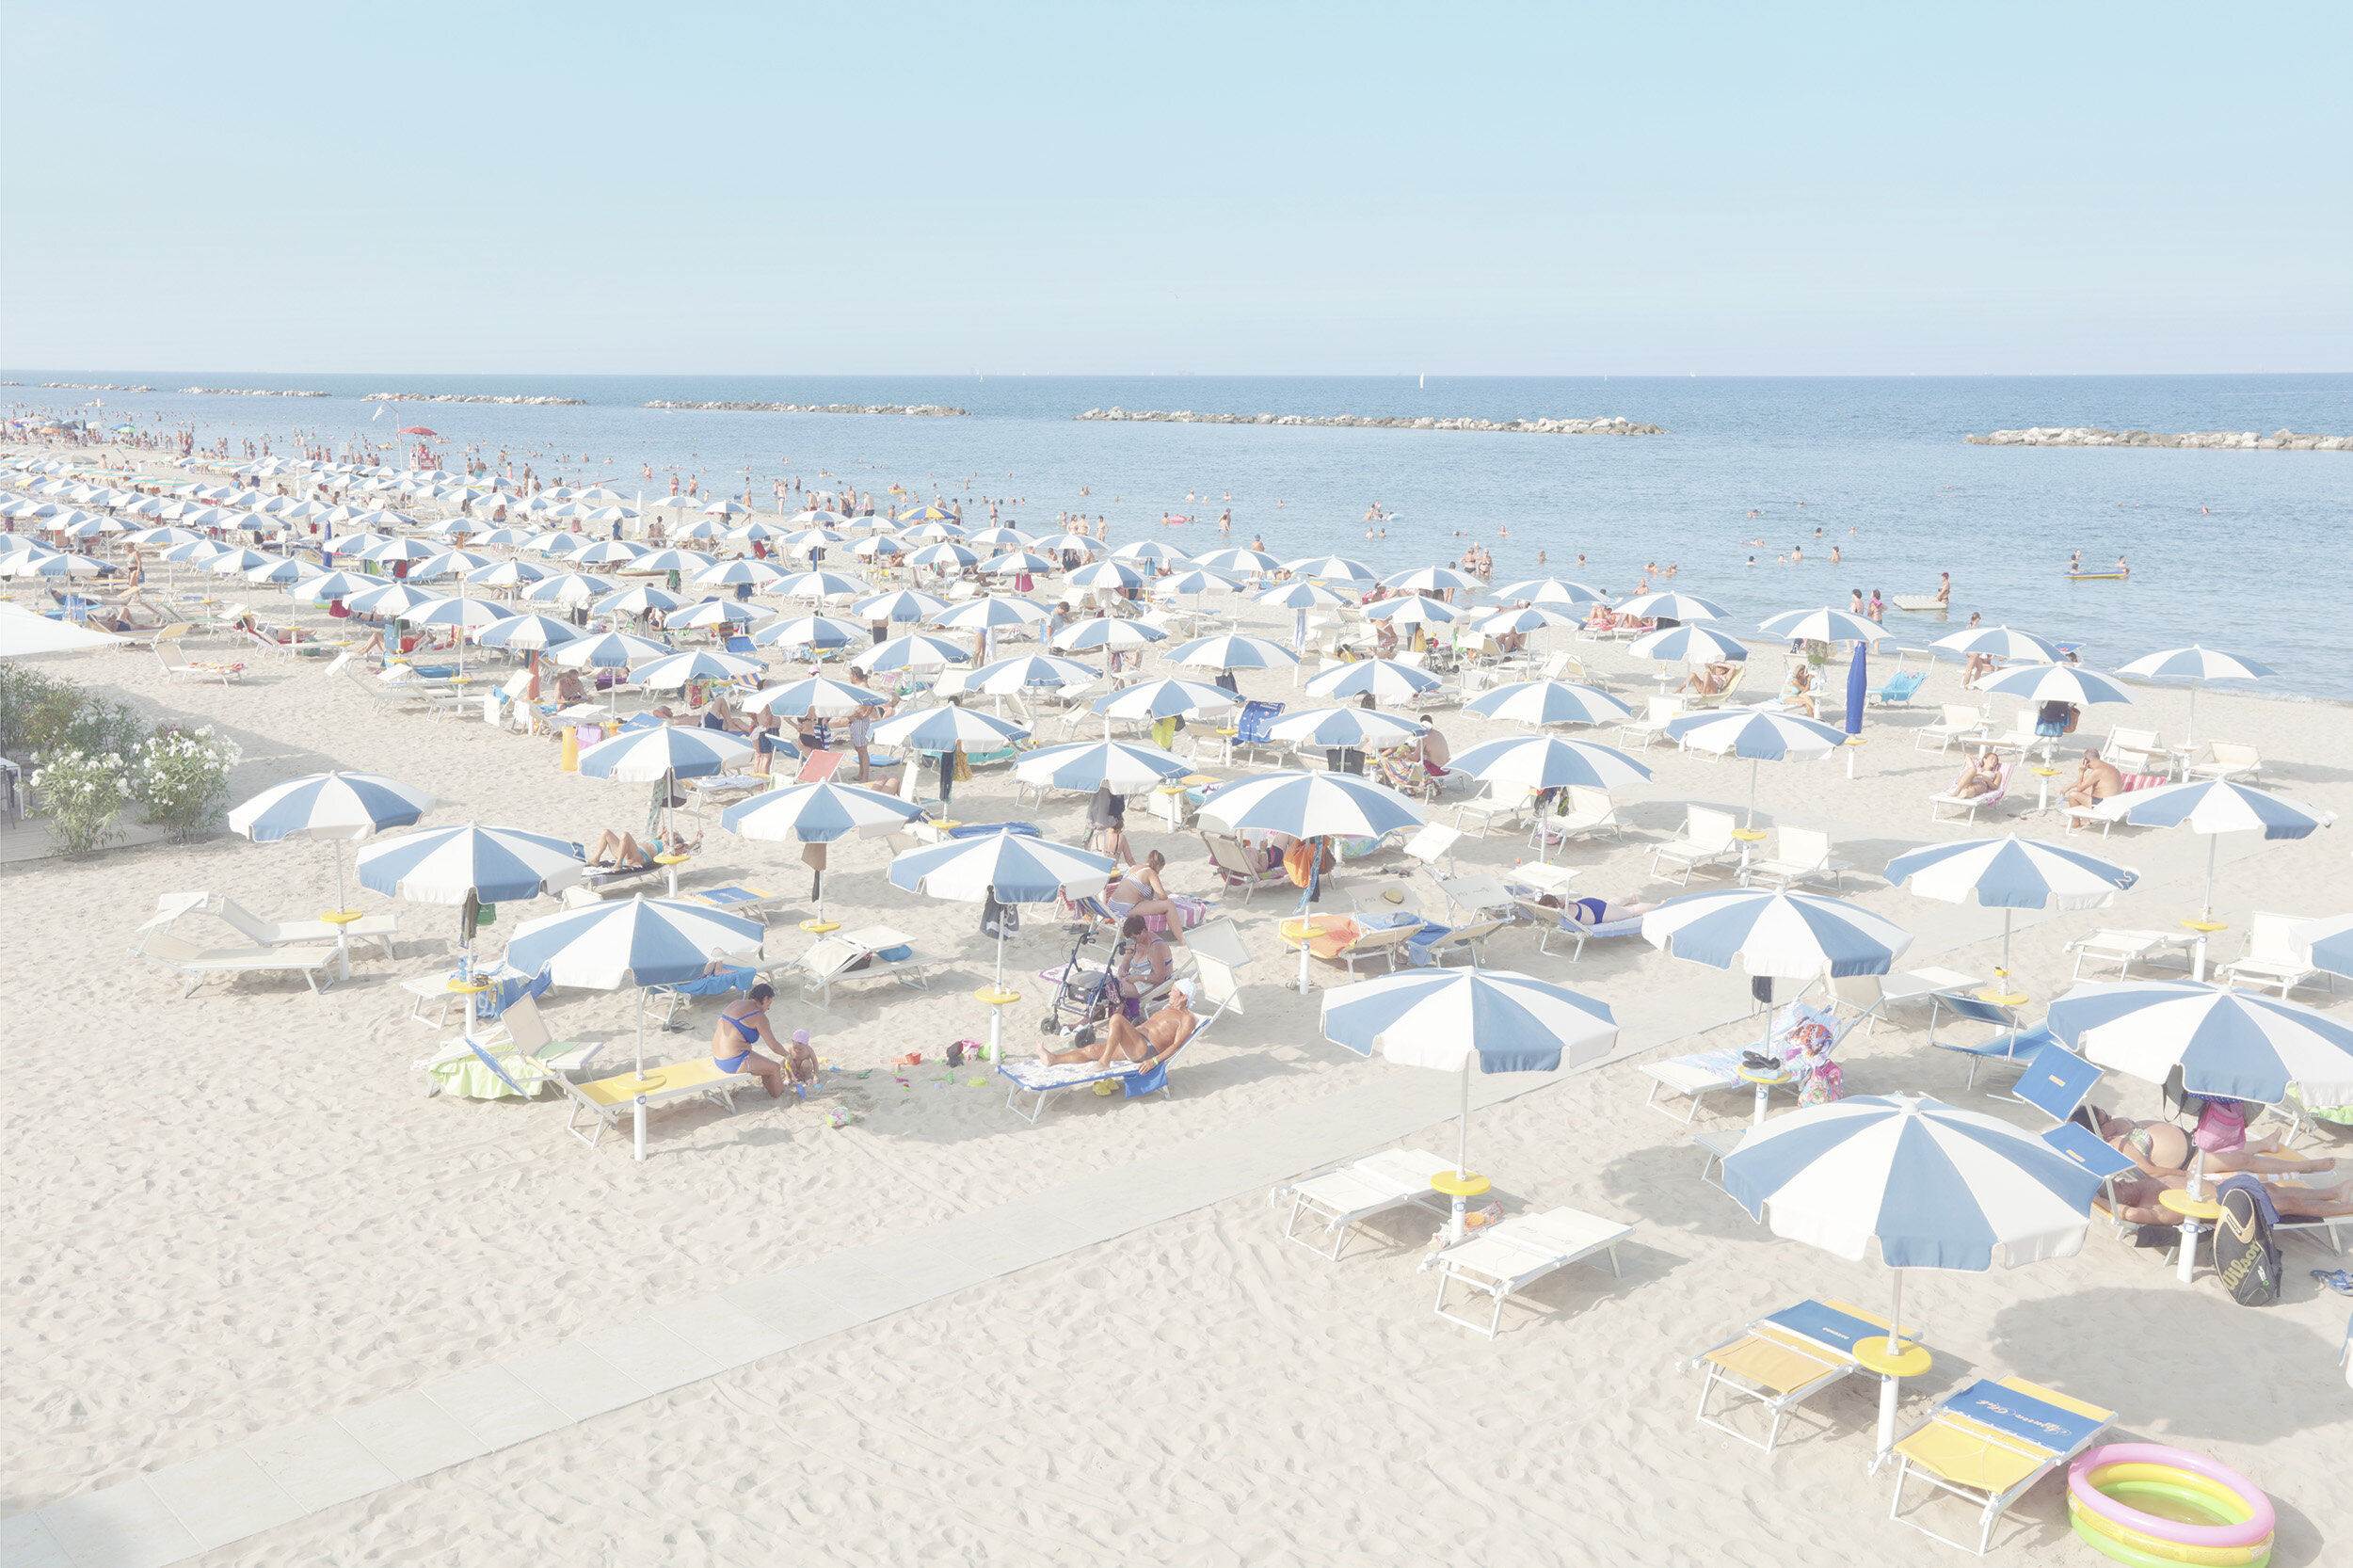 Spiaggia IV - Lido Adriano, 2018